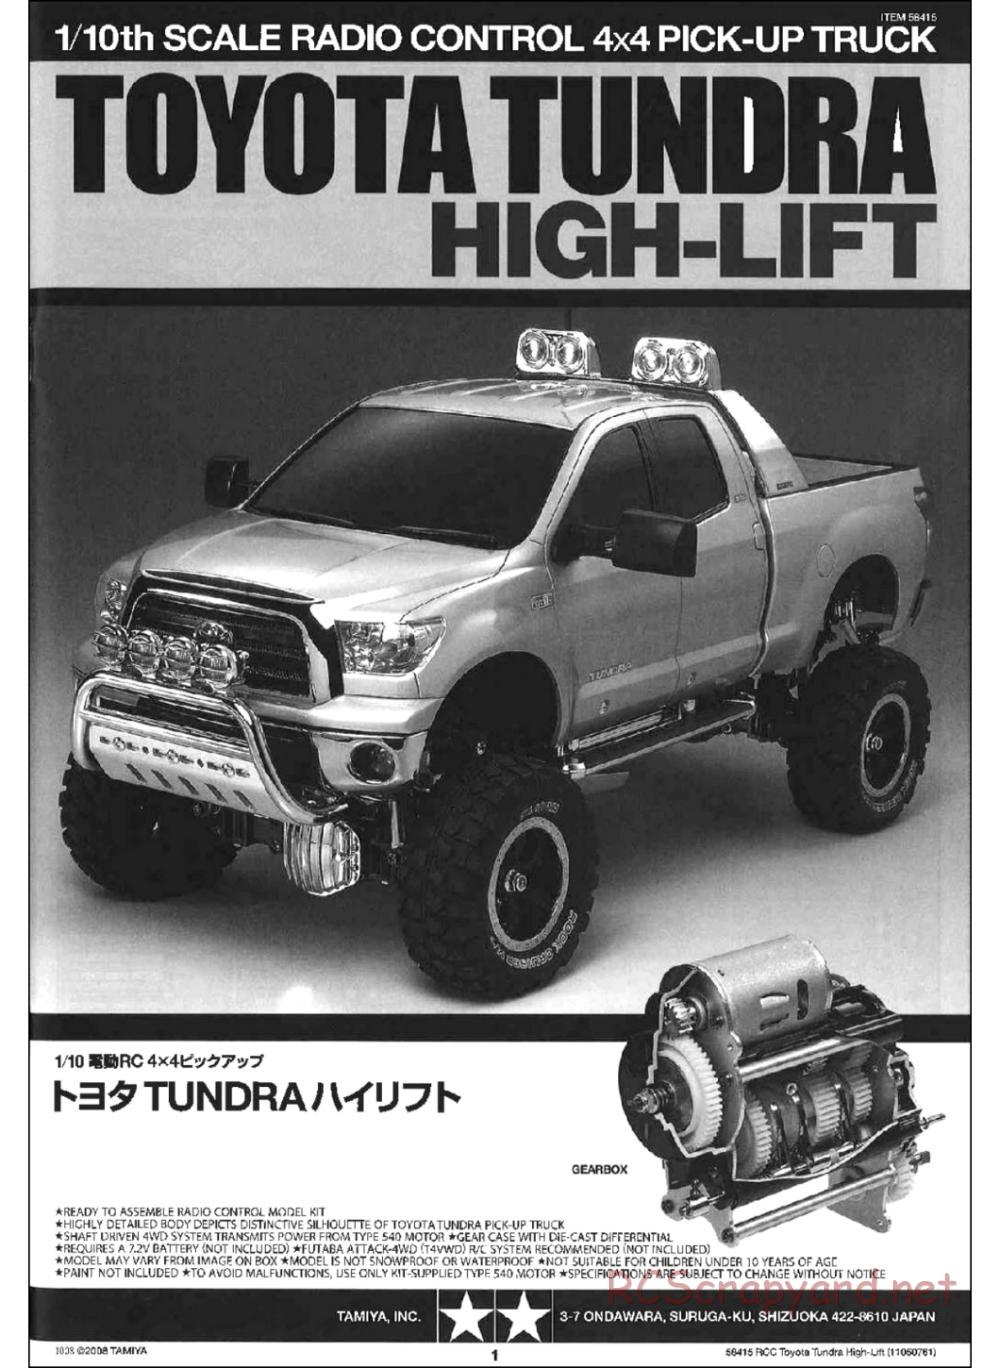 Tamiya - Toyota Tundra High-Lift Chassis - Manual - Page 1